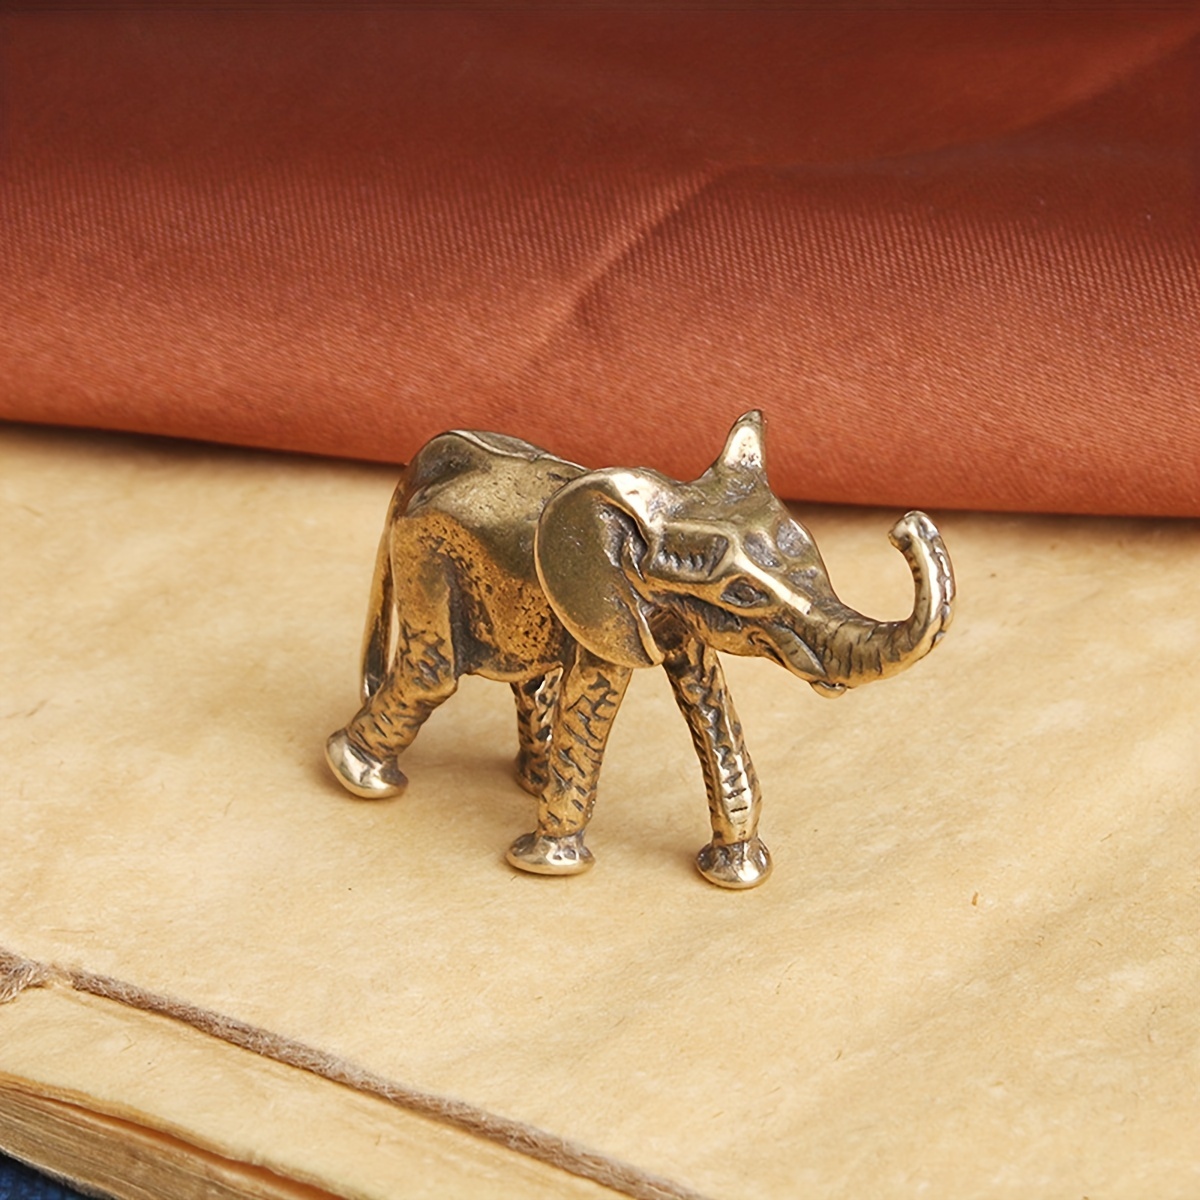 

1pc Antique Brass Elephant Figurine, Mini Good Luck Desk Decor, Vintage-style Prosperity Trunk Up Elephant, Brass Collectible Animal Statue, Room Decor, Home Decor